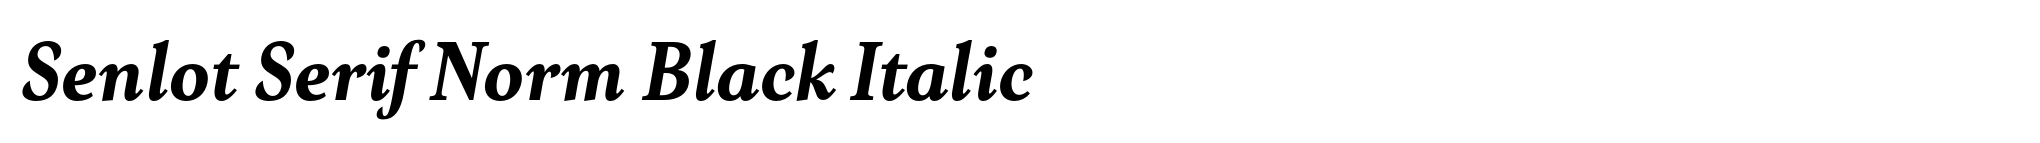 Senlot Serif Norm Black Italic image